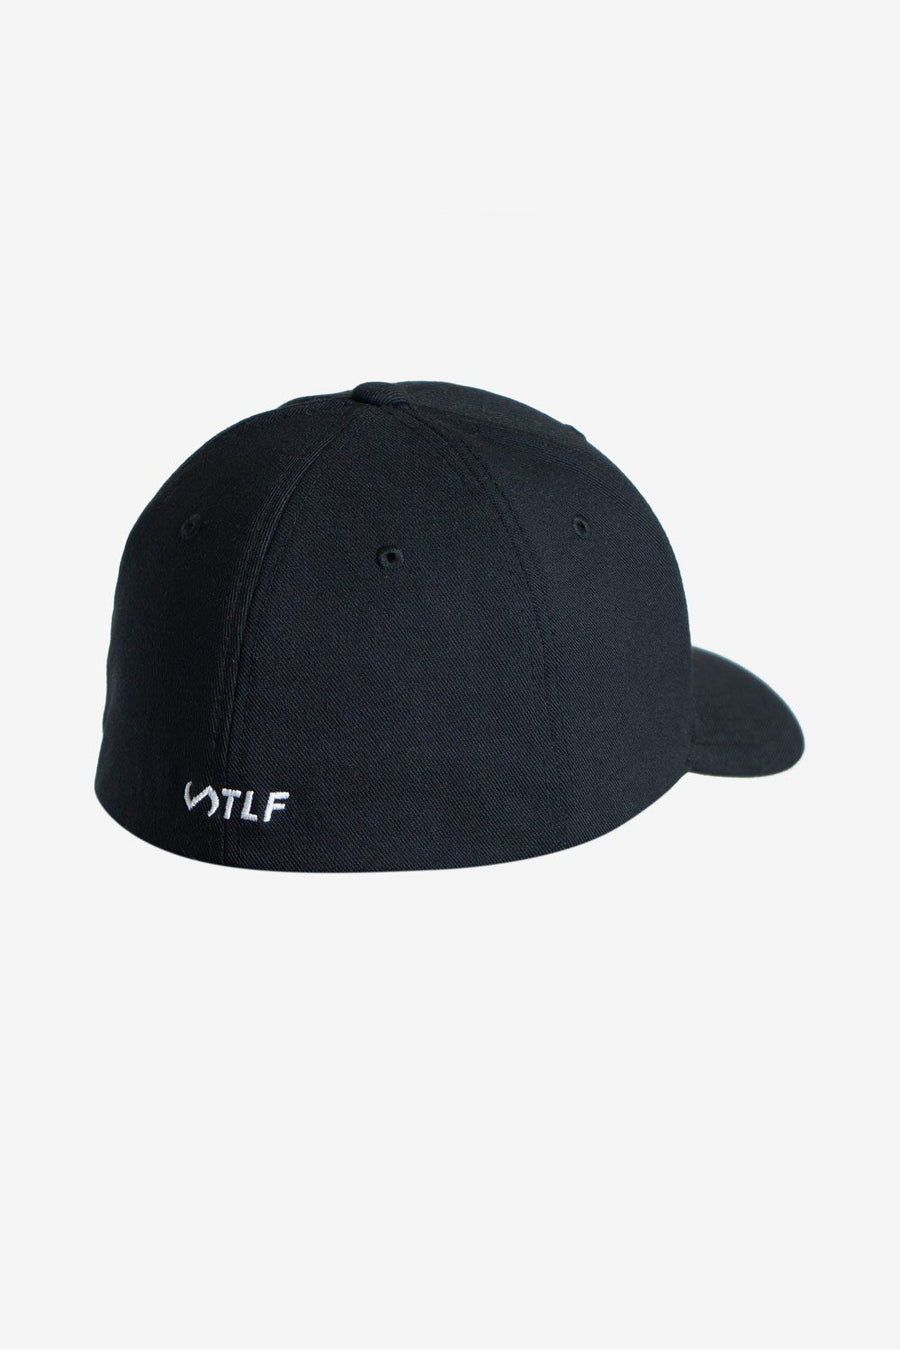 TLF Logo Classic Hat - HATS - TLF Apparel | Take Life Further